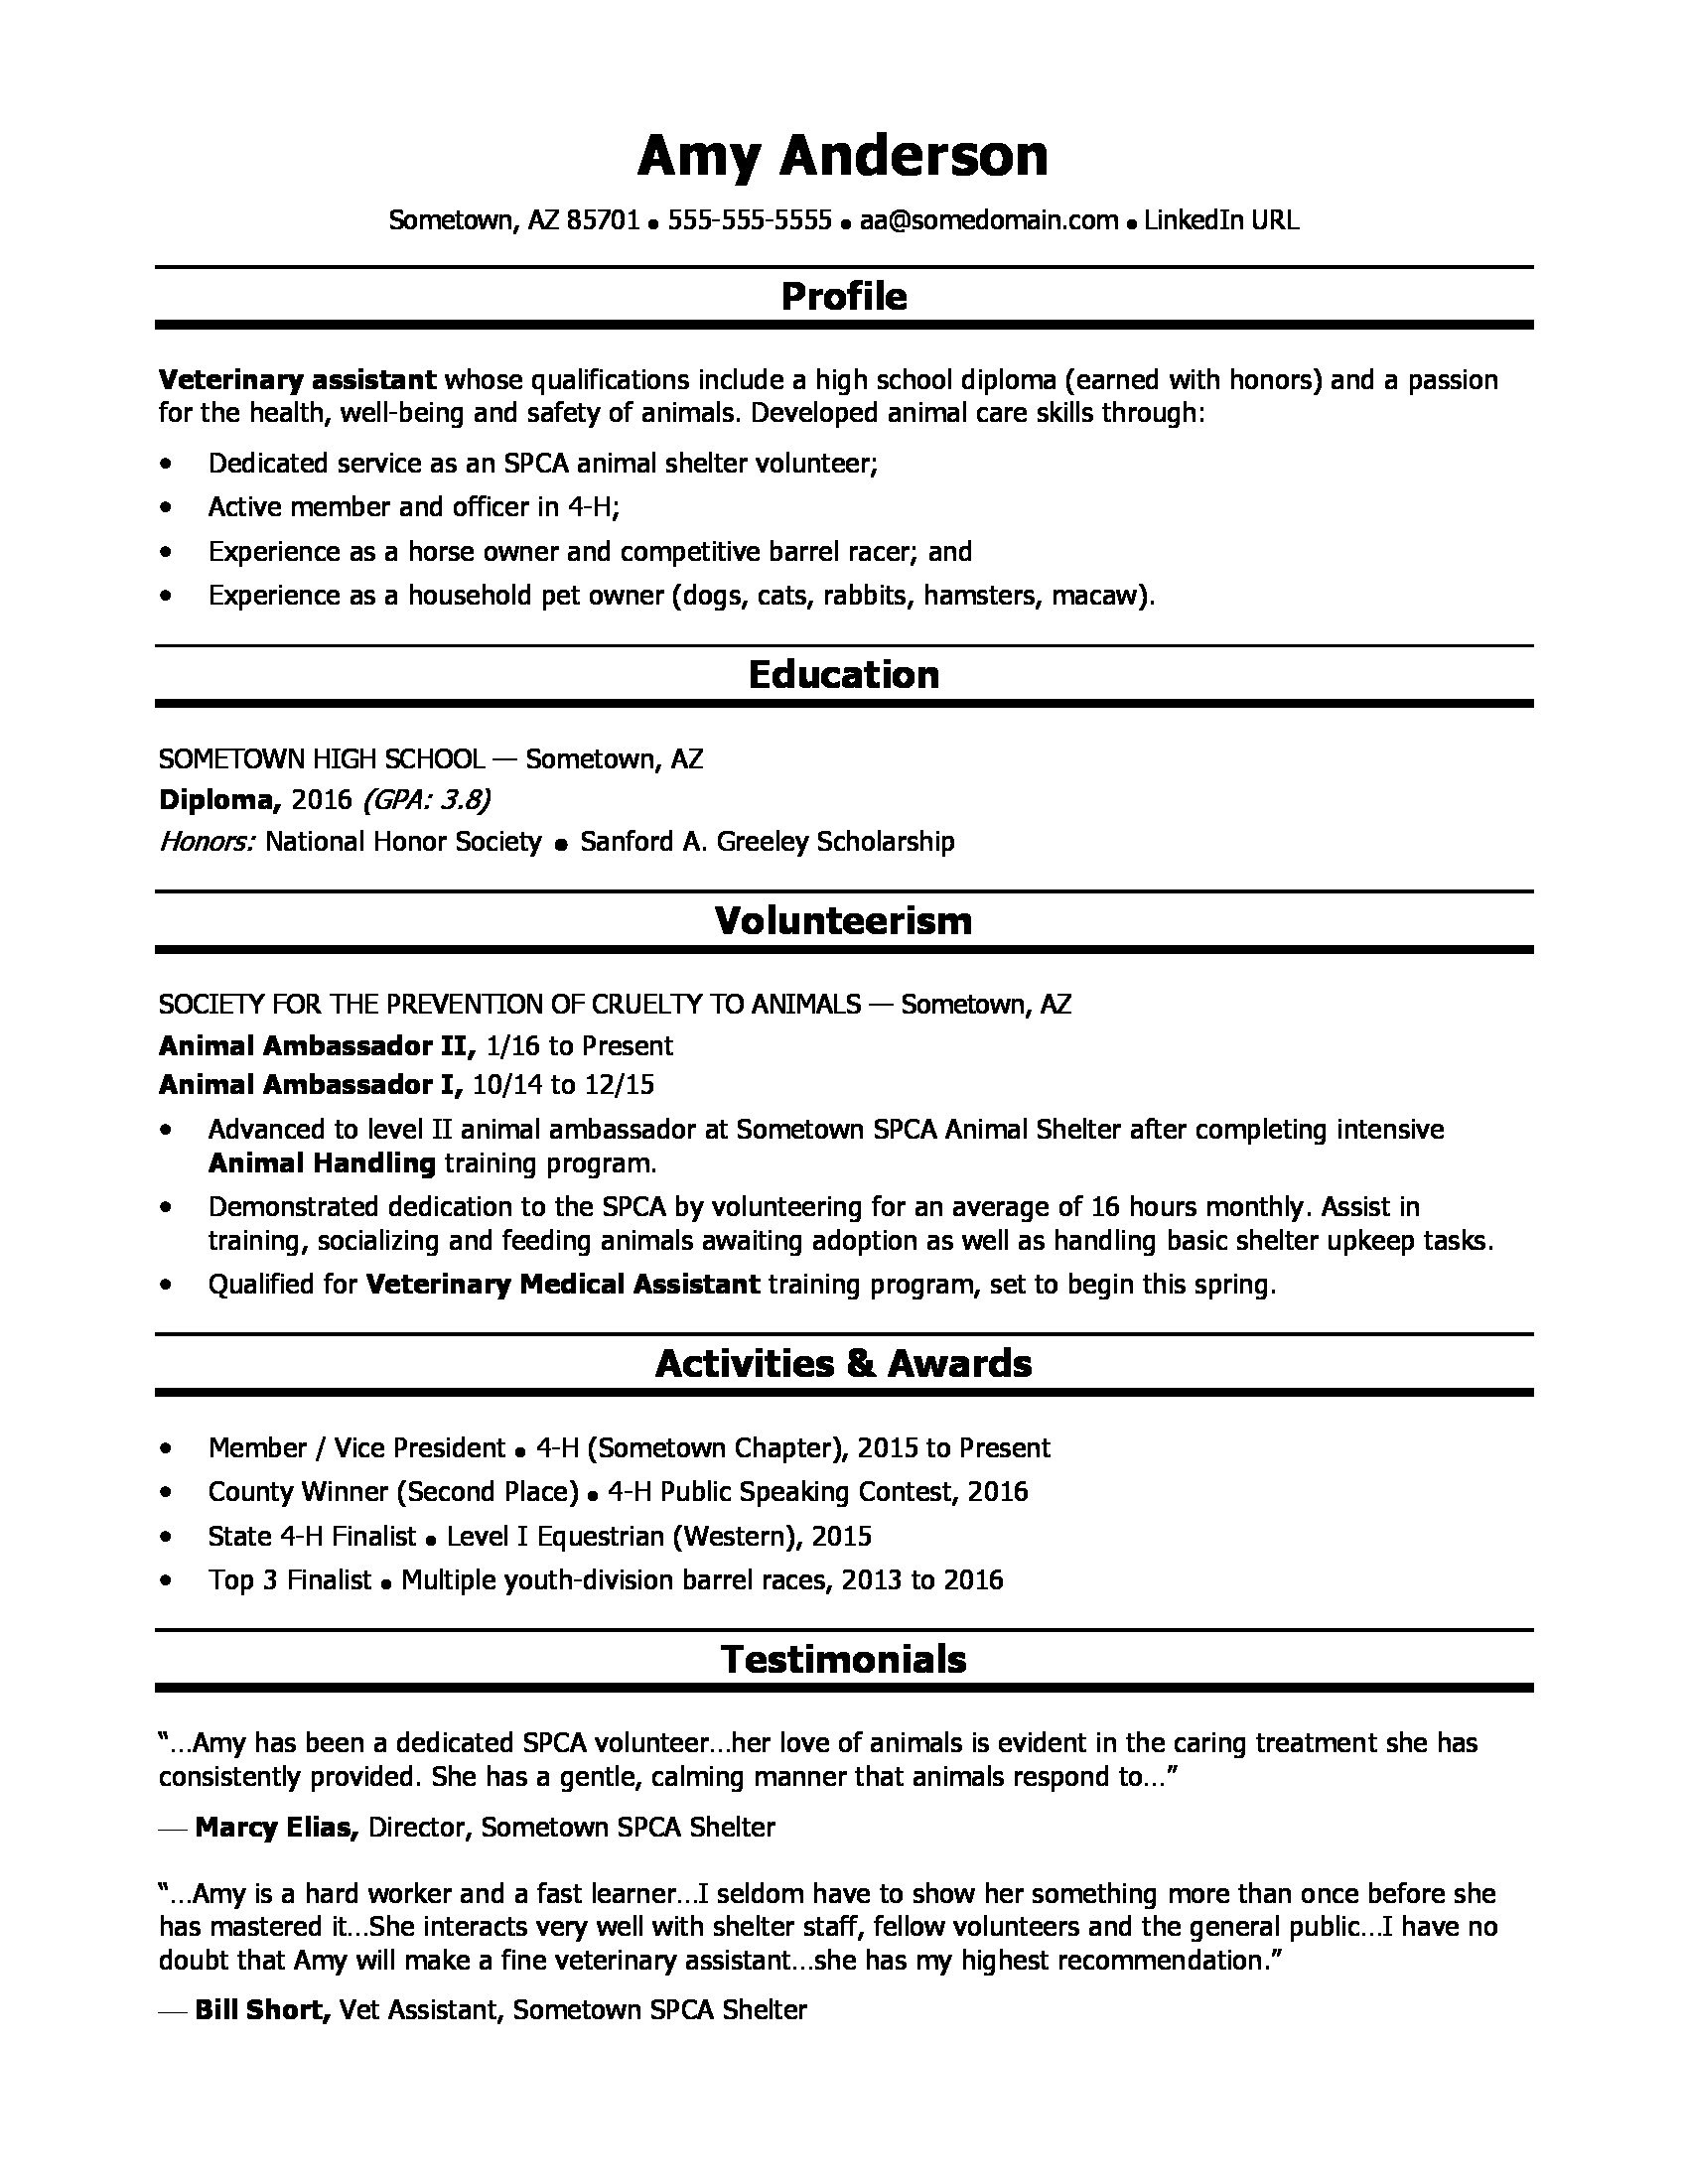 Sample Resume Grad Write Up Examples High School Grad Resume Sample Monster.com